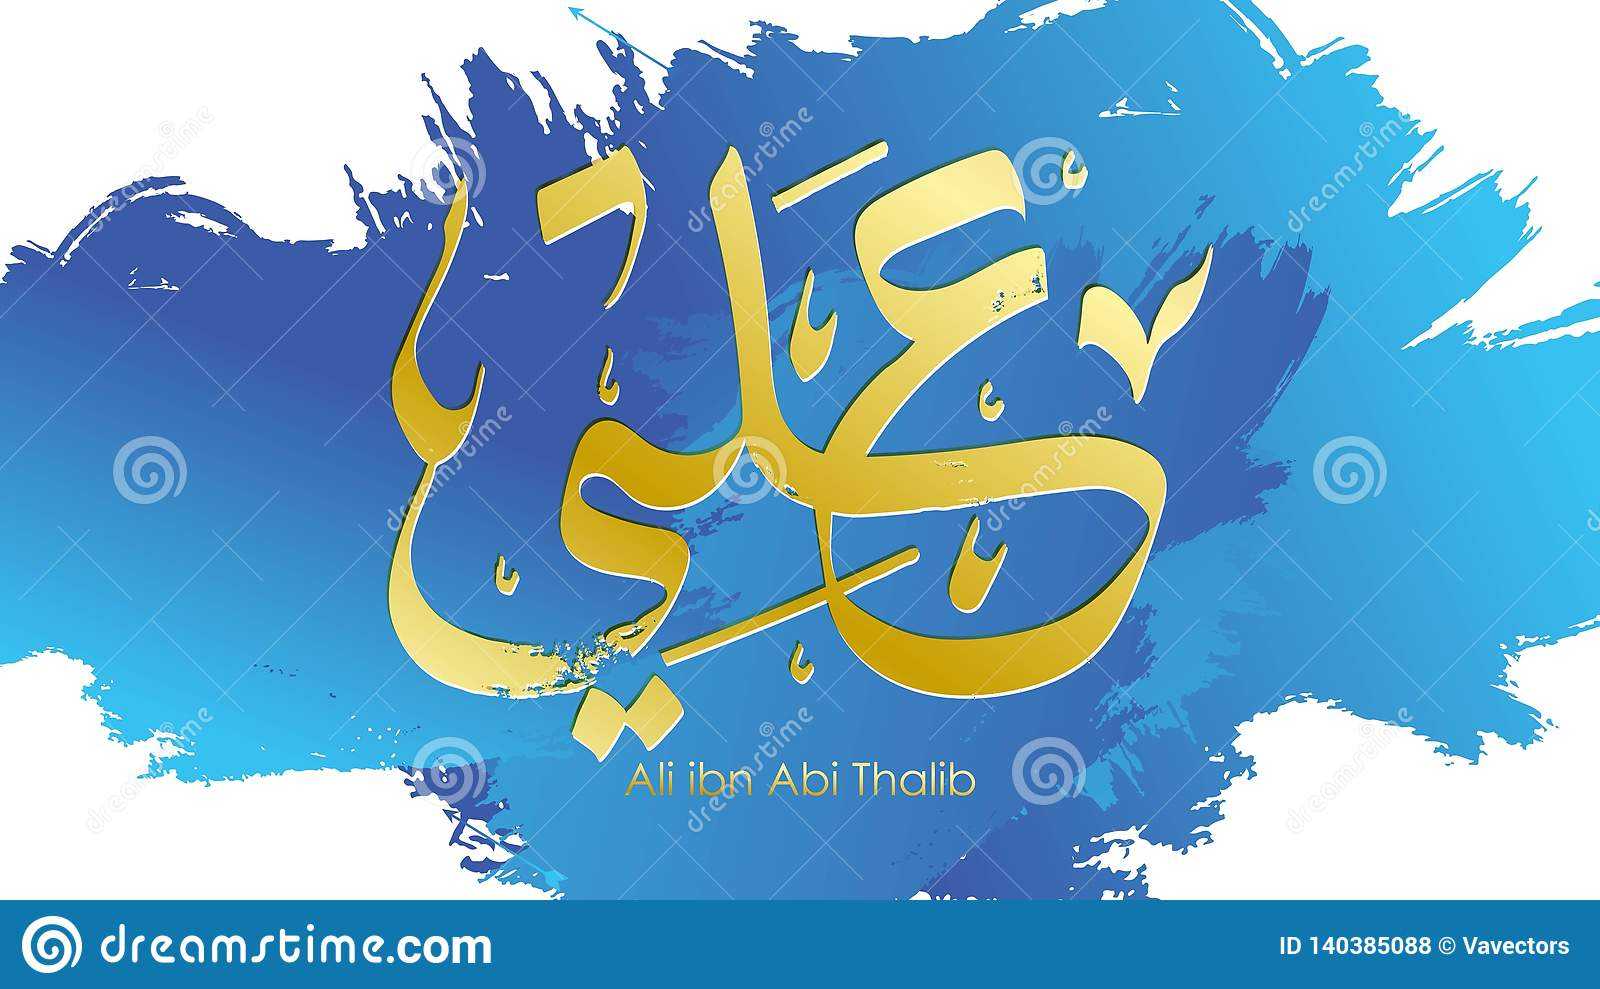 Arabic Hazrat Ali Bin Abi Thalib Greeting Card Template Inside Bin Card Template